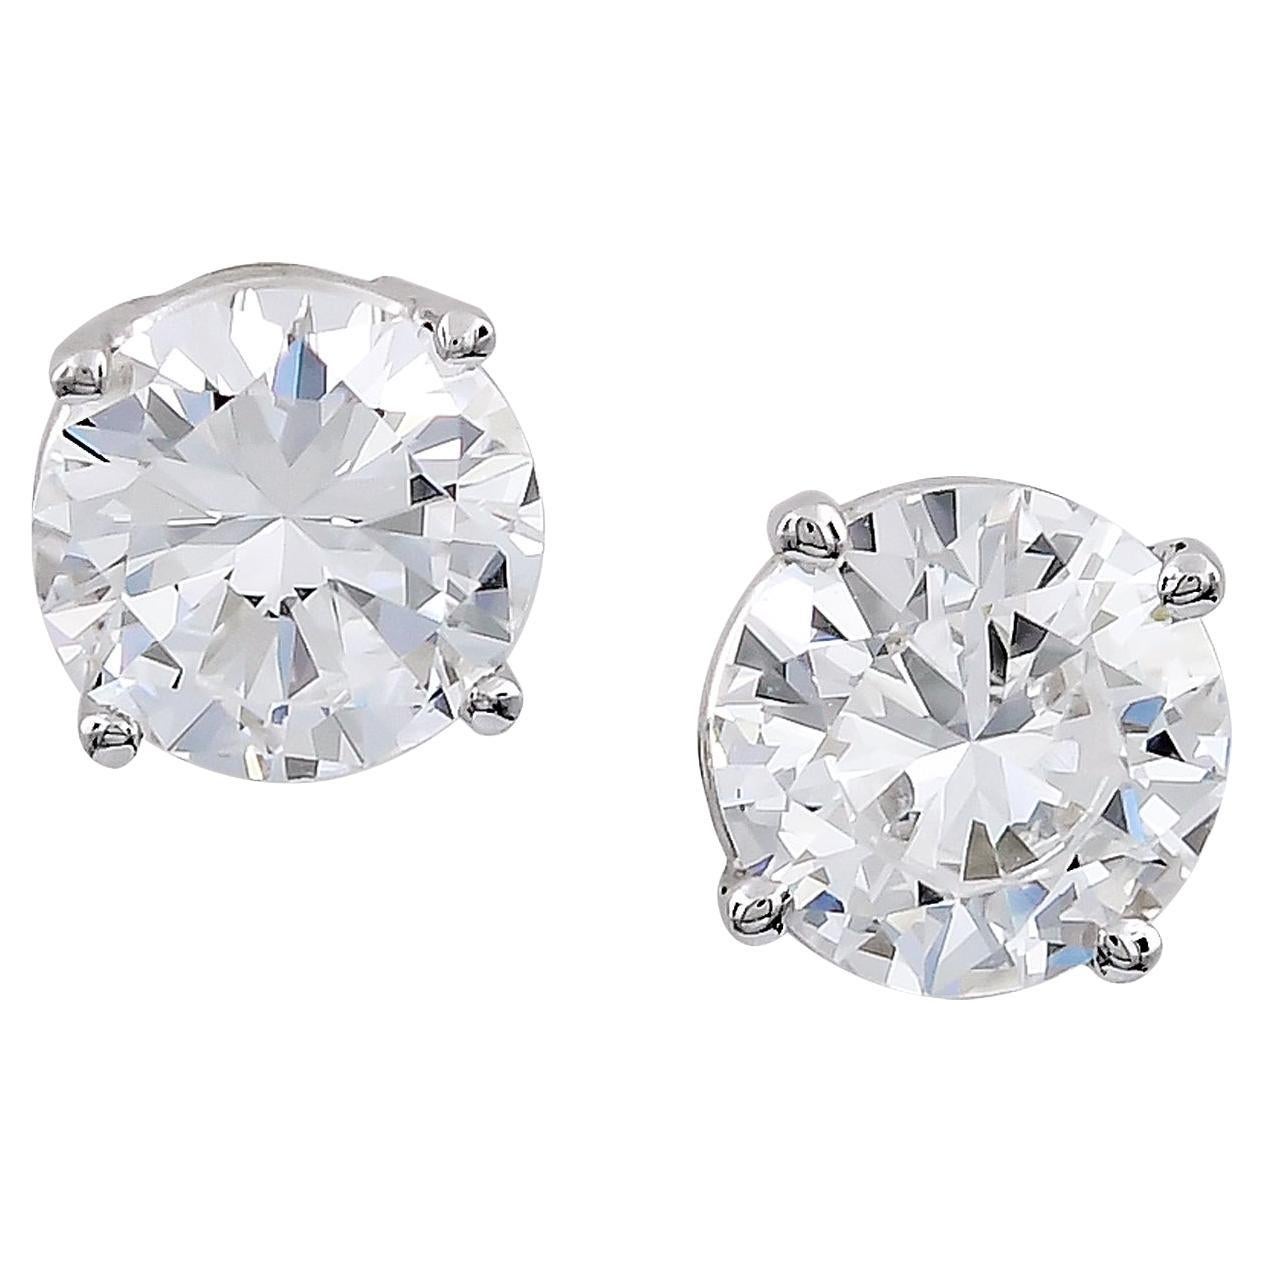 Spectra Fine Jewelry GIA Certified 1.28 & 1.31 Carat D Color Diamond Earrings